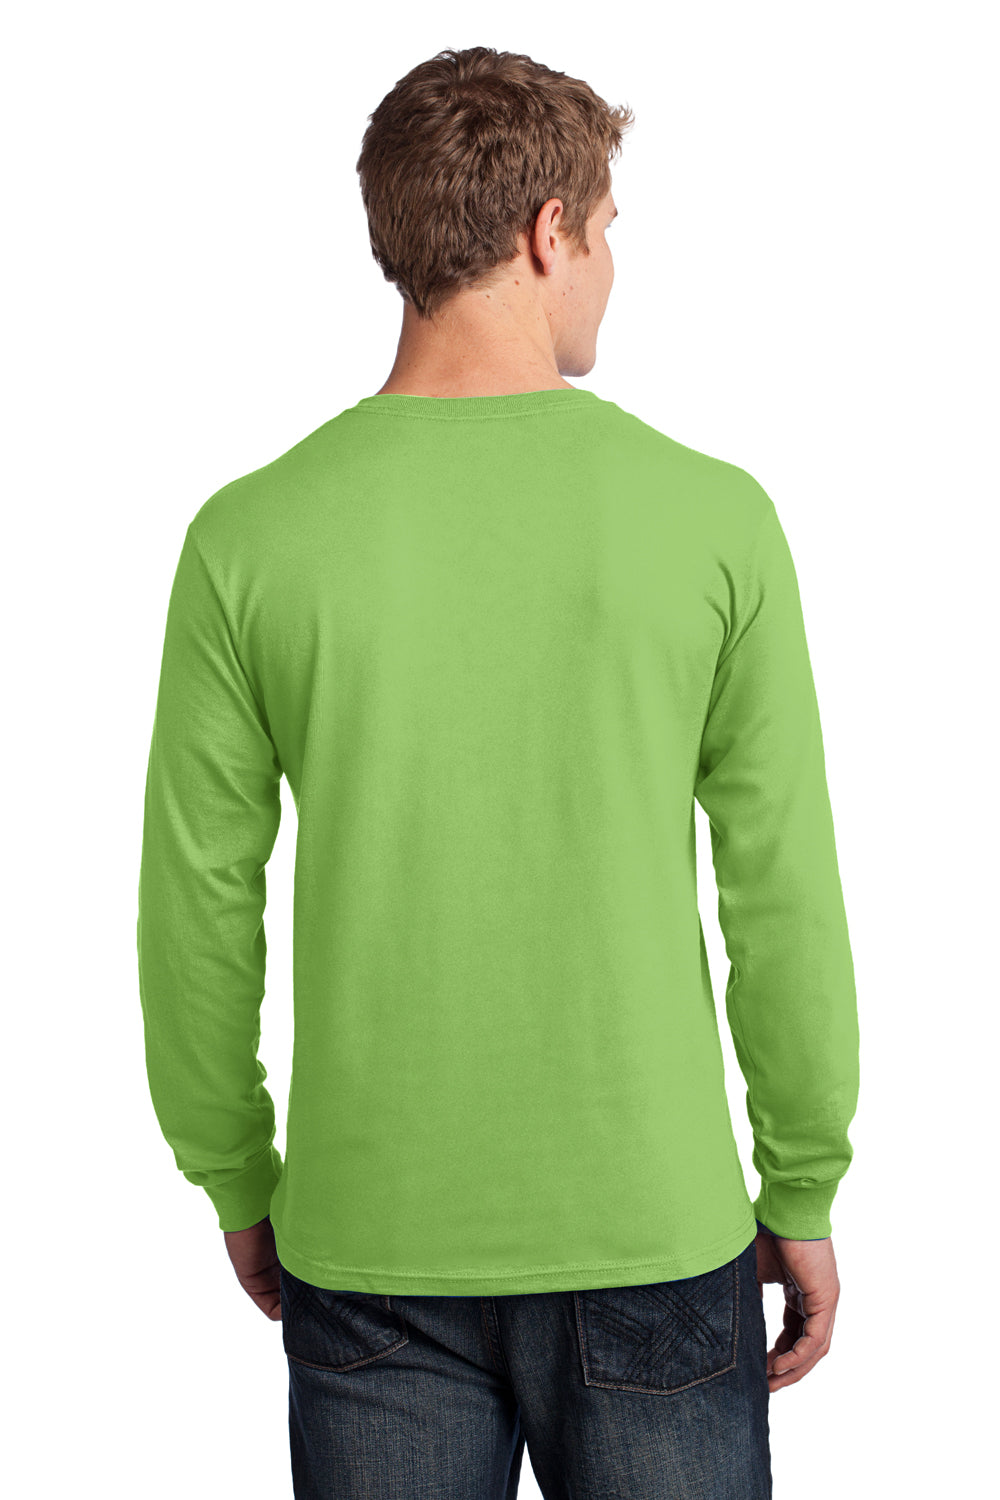 Port & Company PC54LS Mens Core Long Sleeve Crewneck T-Shirt Lime Green Back